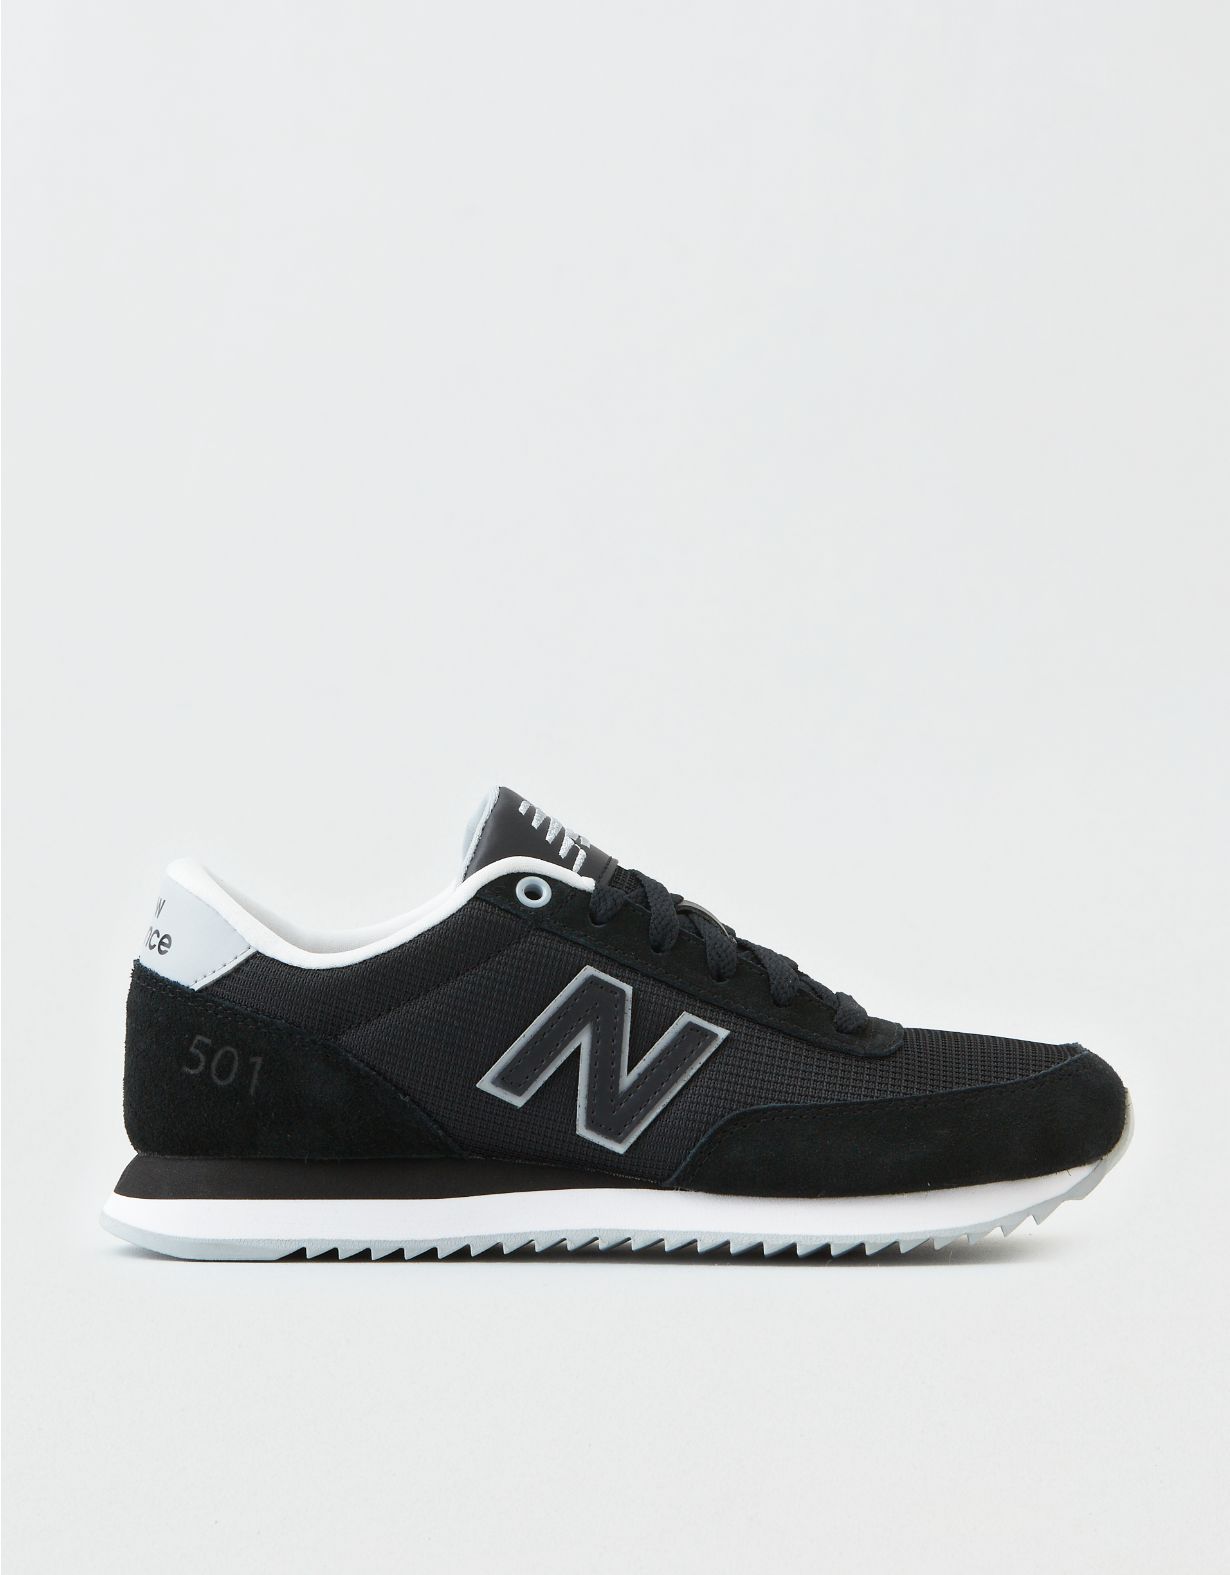 New Balance 501 Core Sneaker